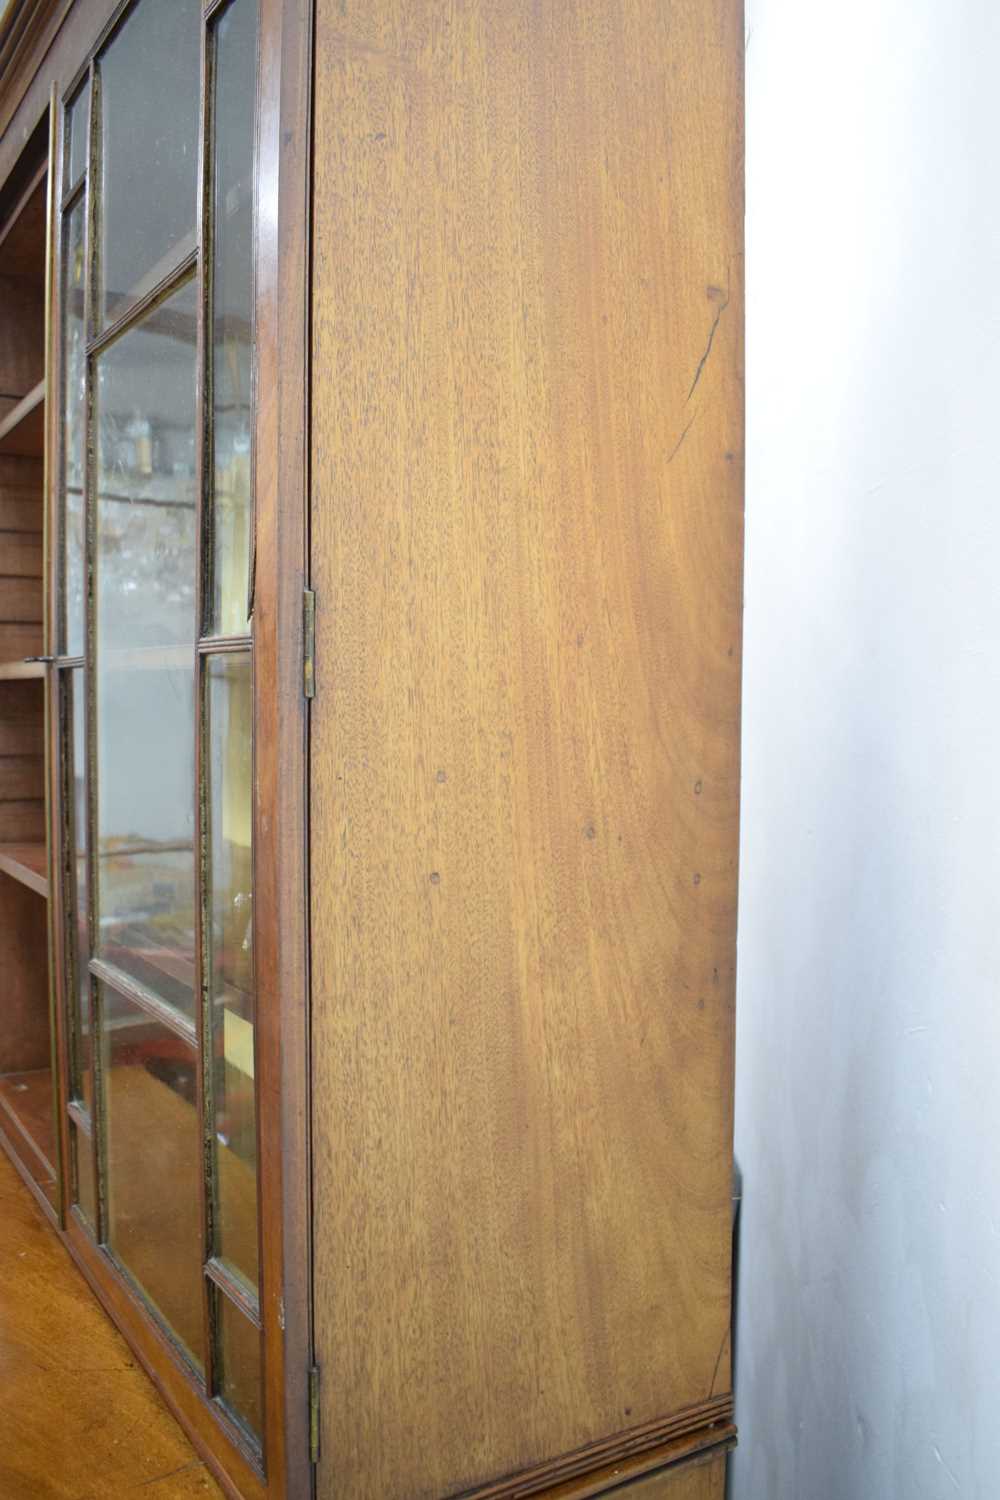 Late George III mahogany secretaire bookcase - Image 19 of 31